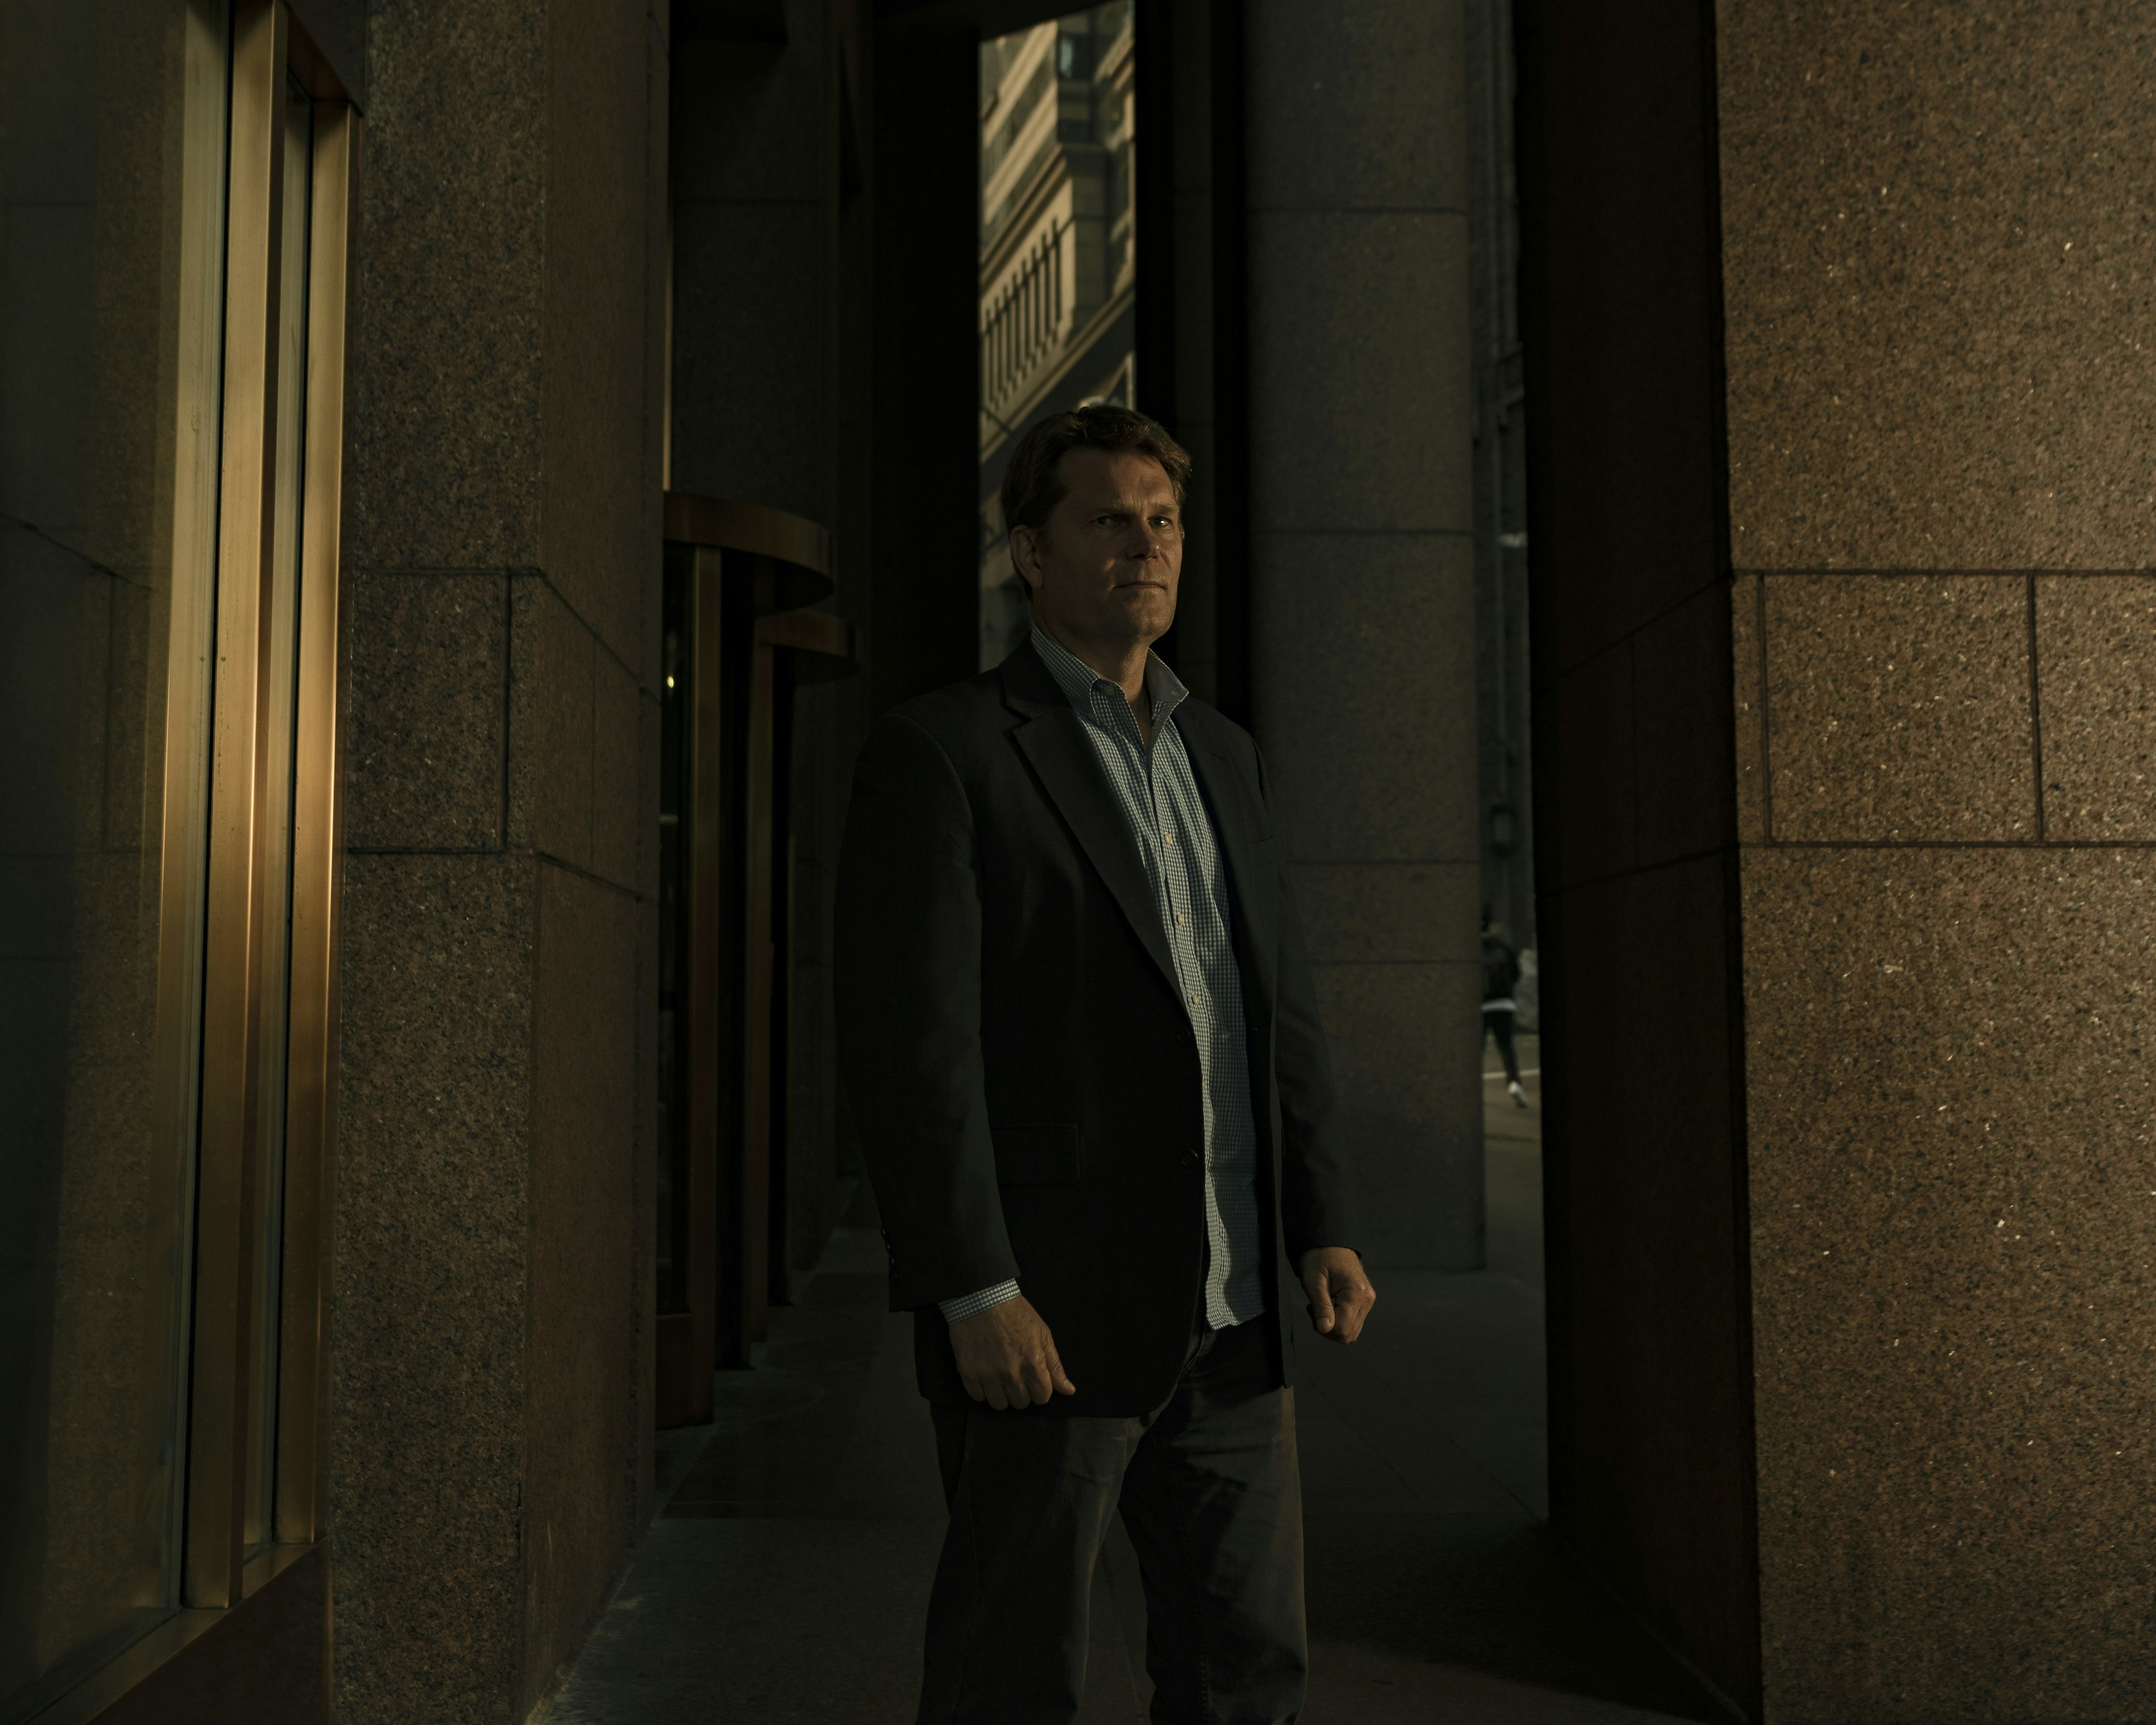 Former FBI agent and Michael German photographed near Wall Street downtown Manhattan on September 13, 2019. Sasha Maslov for the Intercept